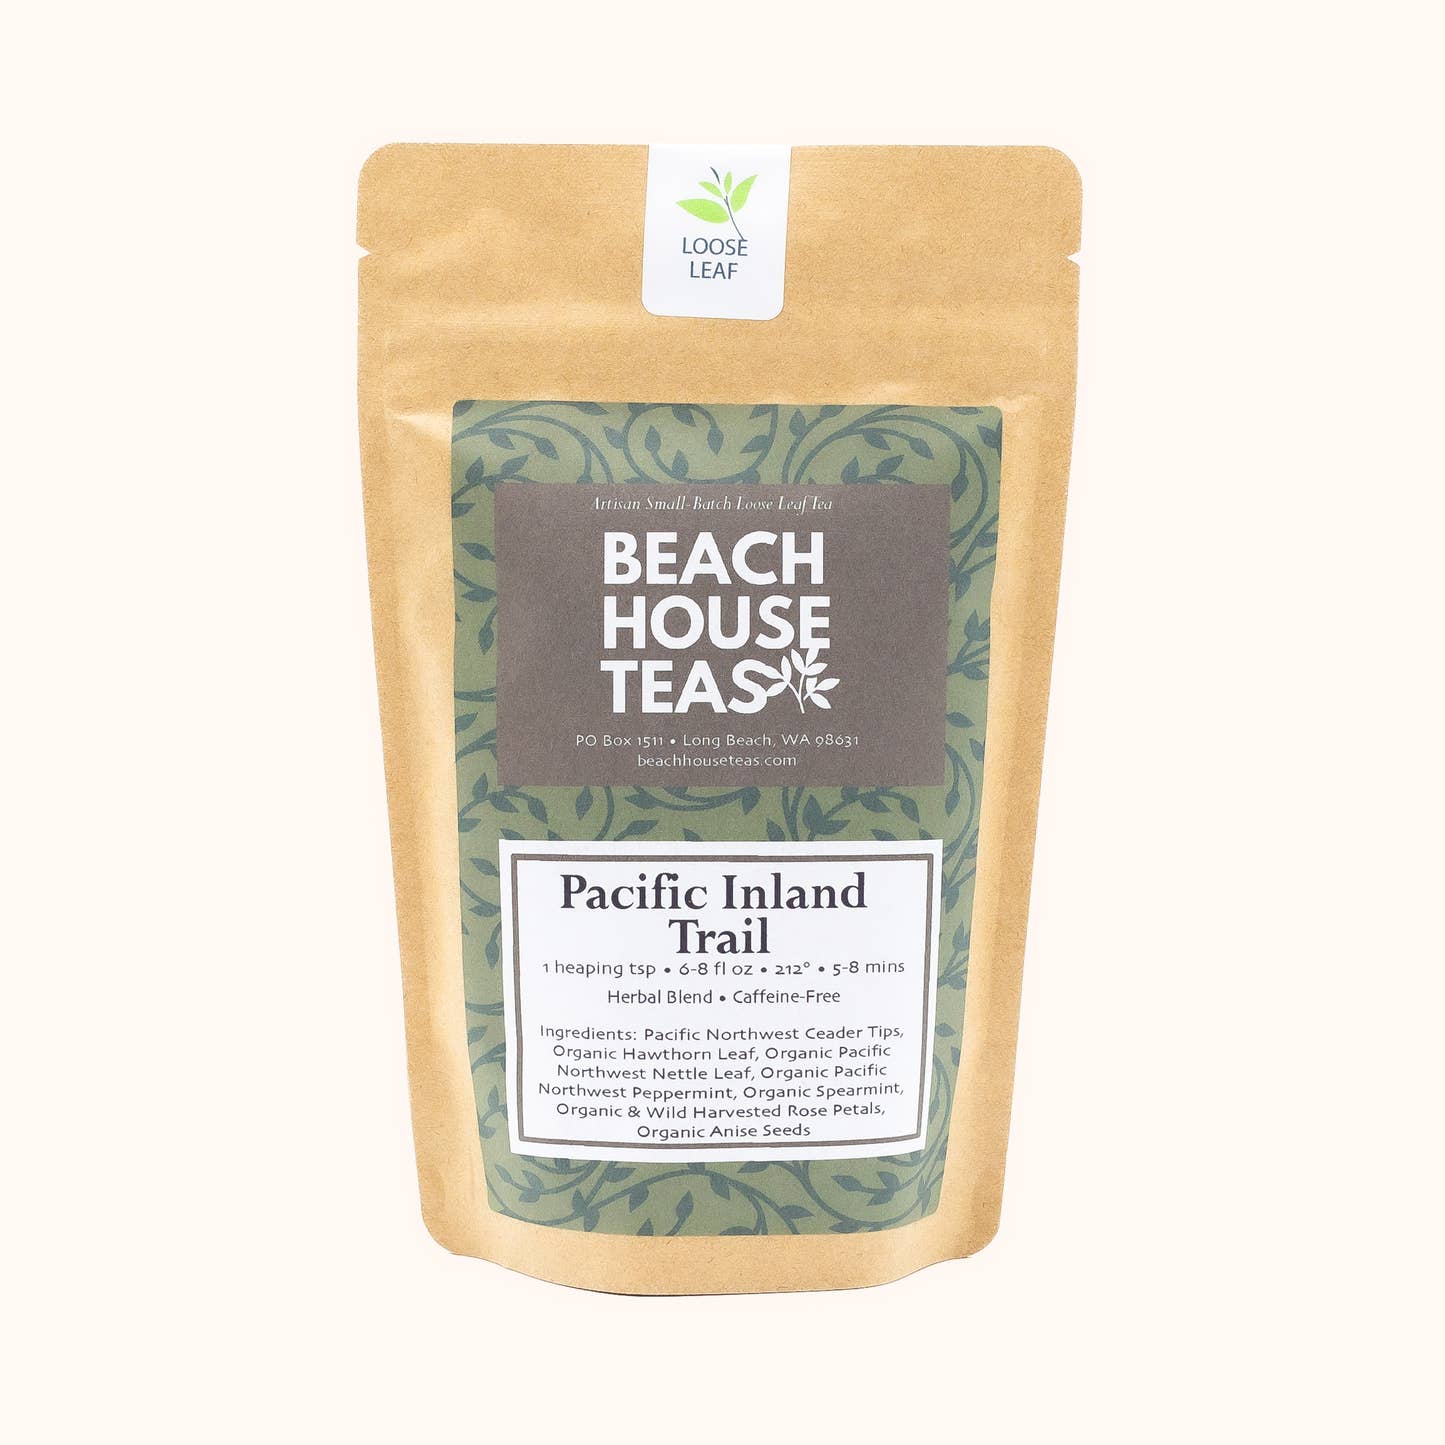 Pacific Inland Trail loose leaf tea by Beach House Teas printed kraft pouch